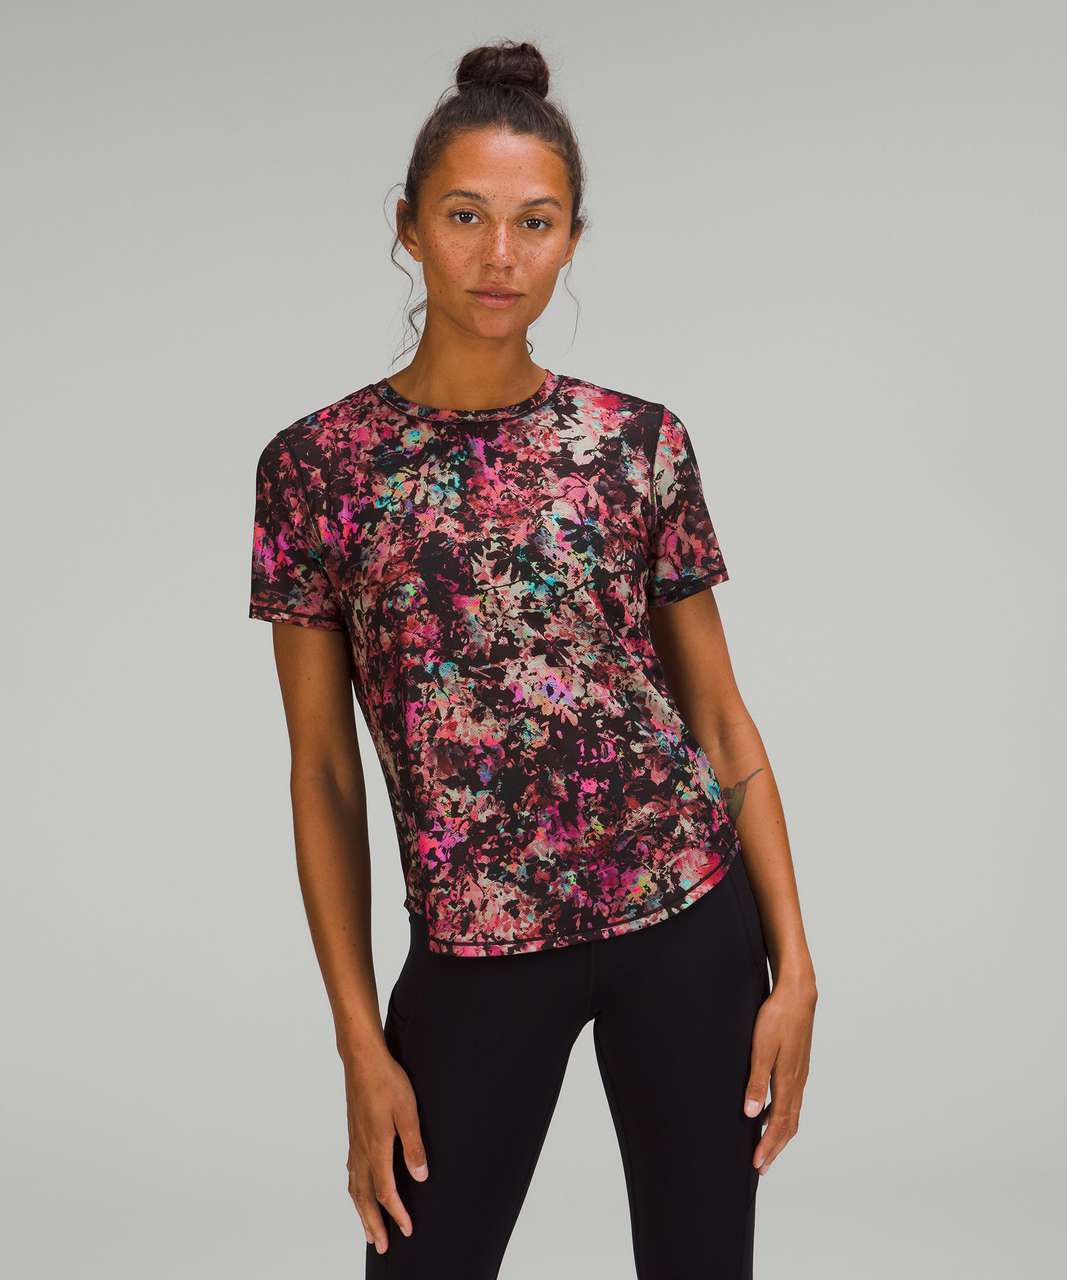 Lululemon High-Neck Running and Training T-Shirt - Stencil Blossom Red Multi